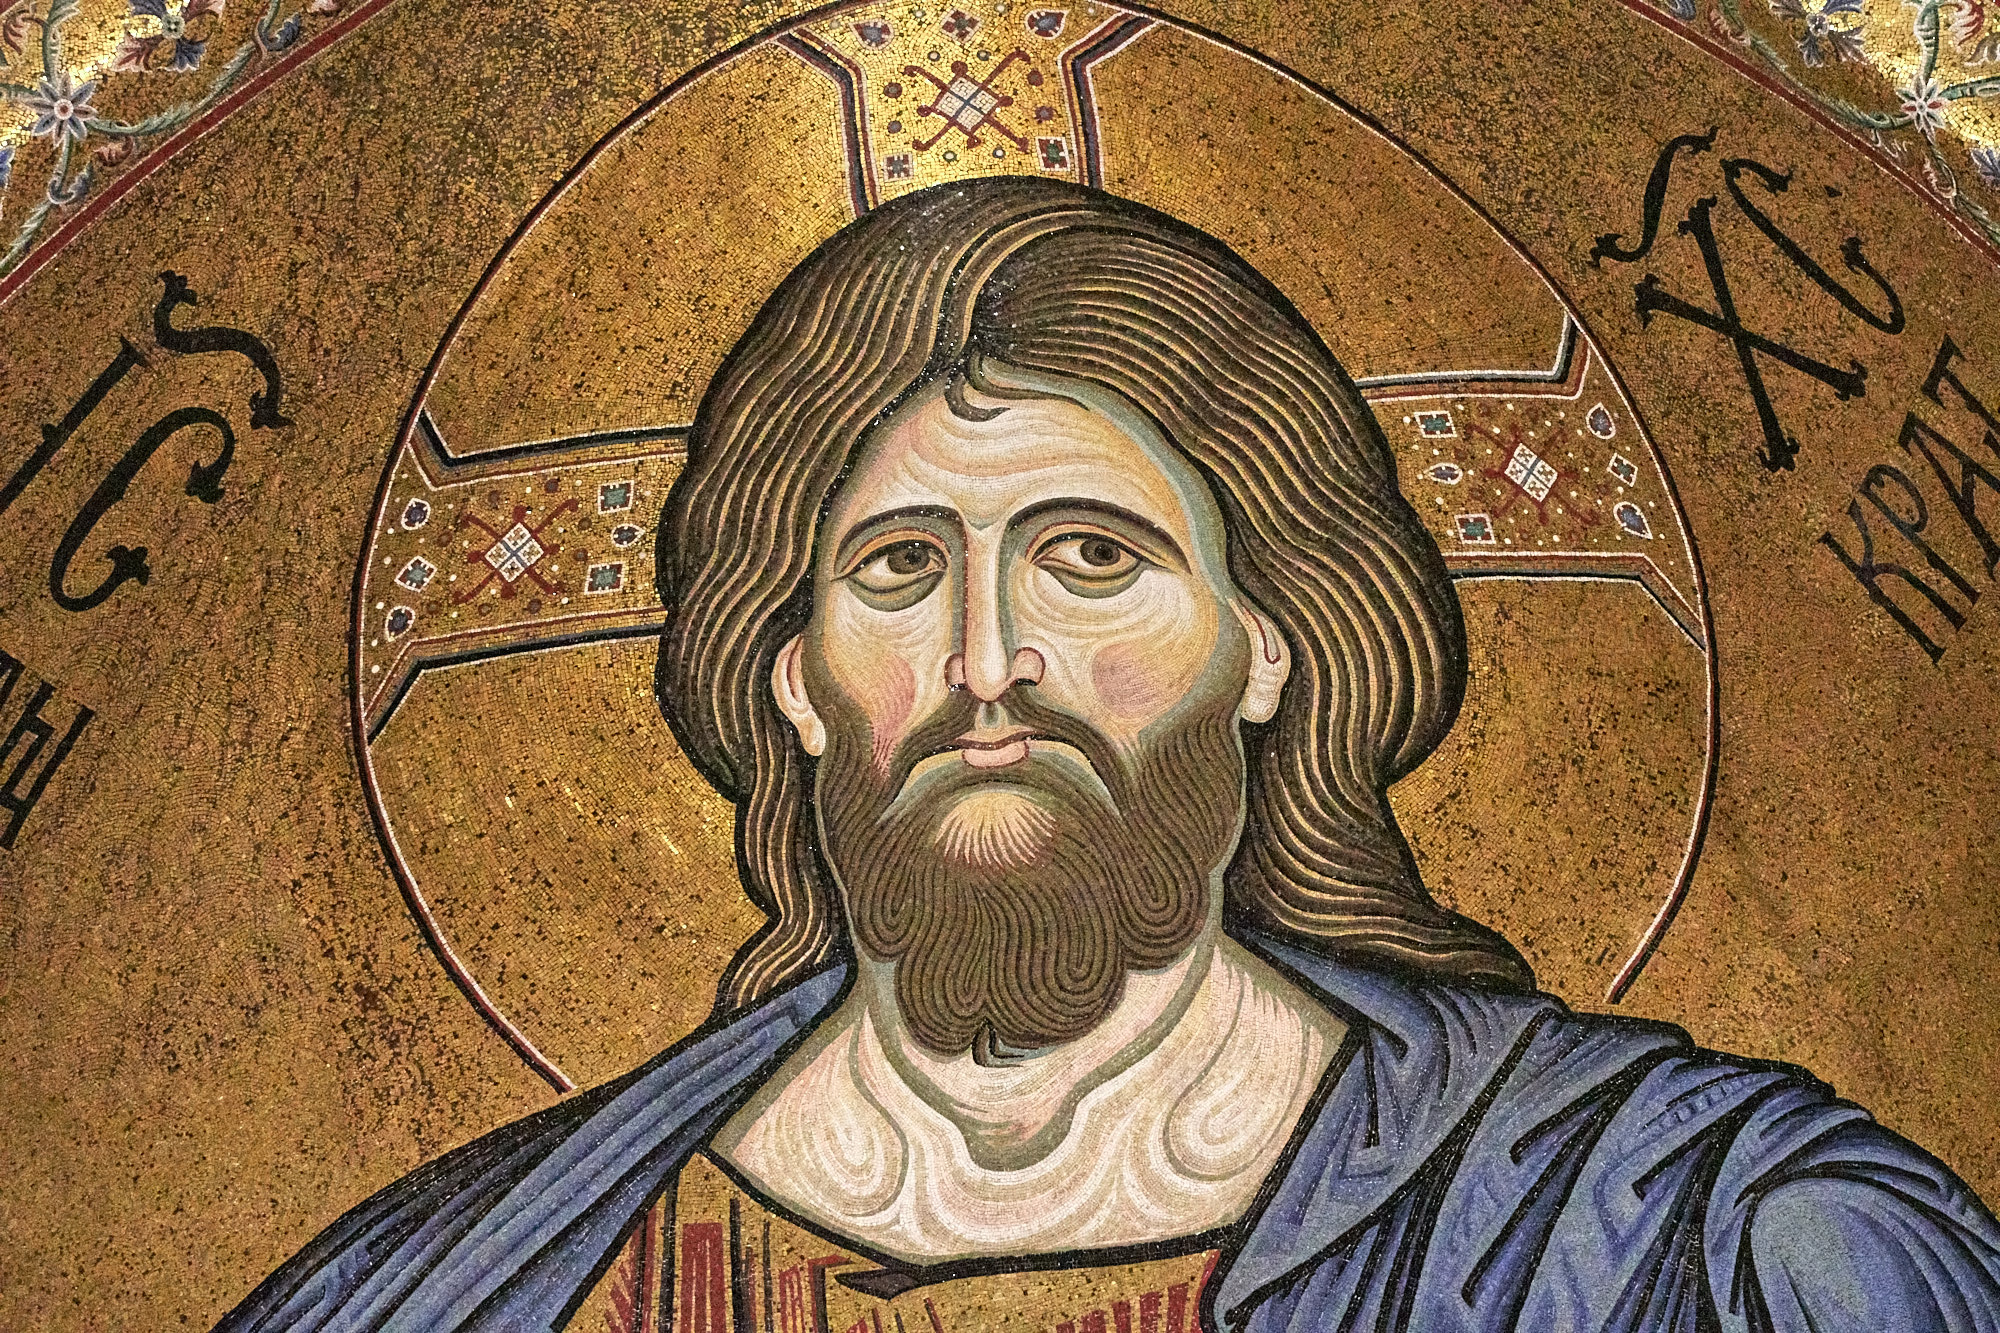 “Jesus Wept” | zmetro.com